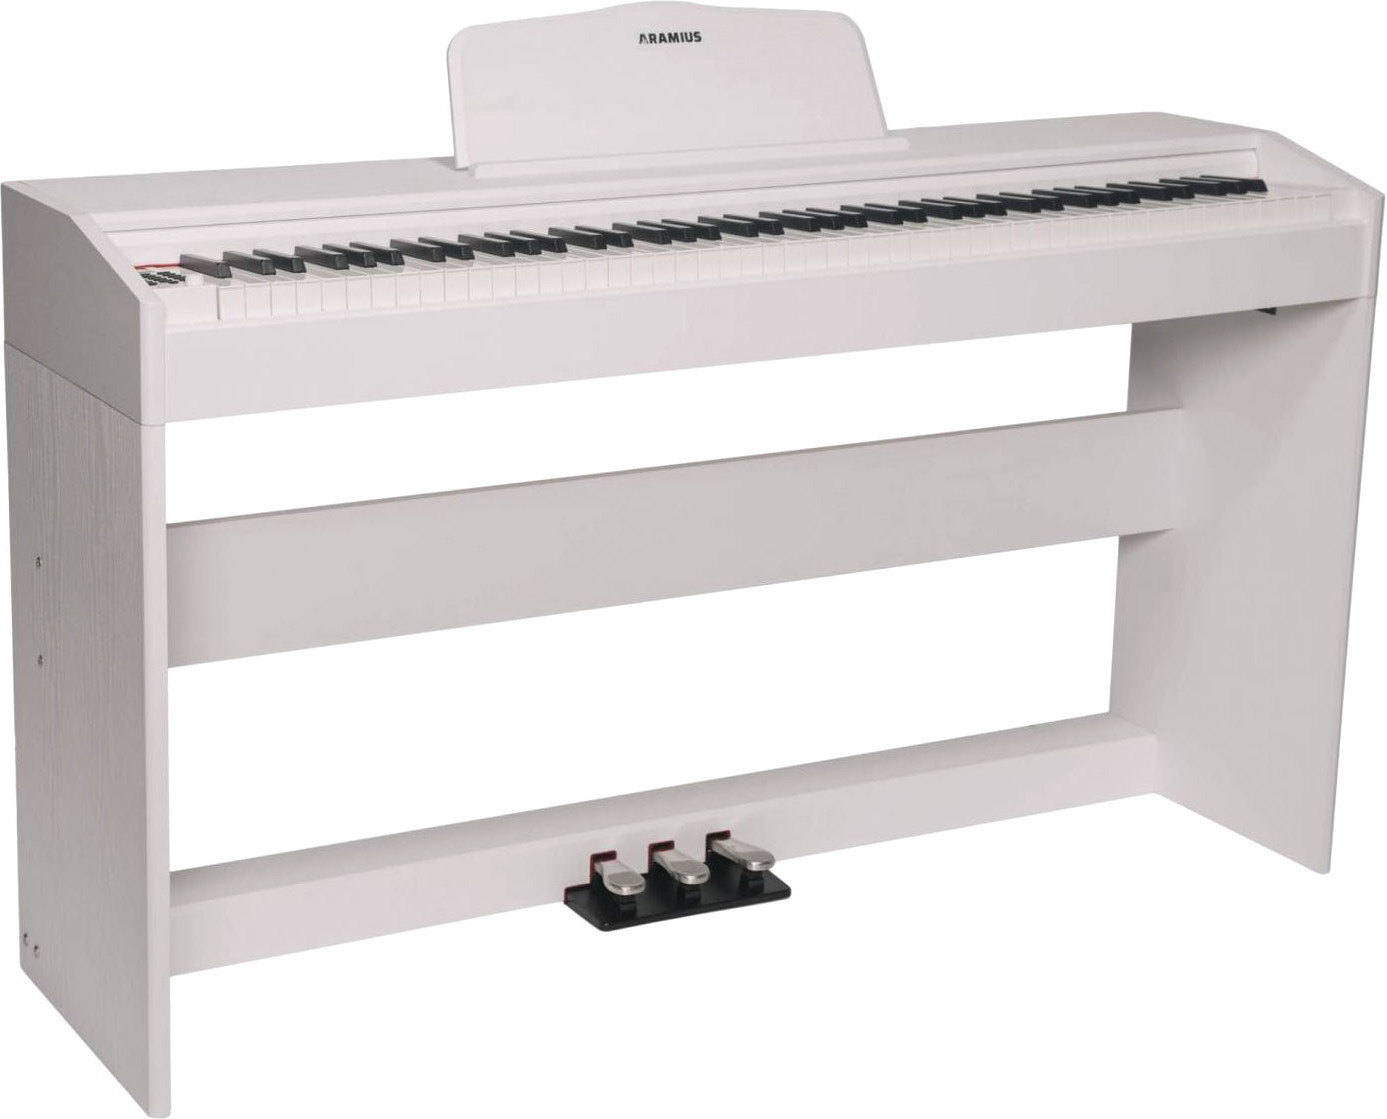 

Цифровое пианино Aramius APO-140 MWH (белый)